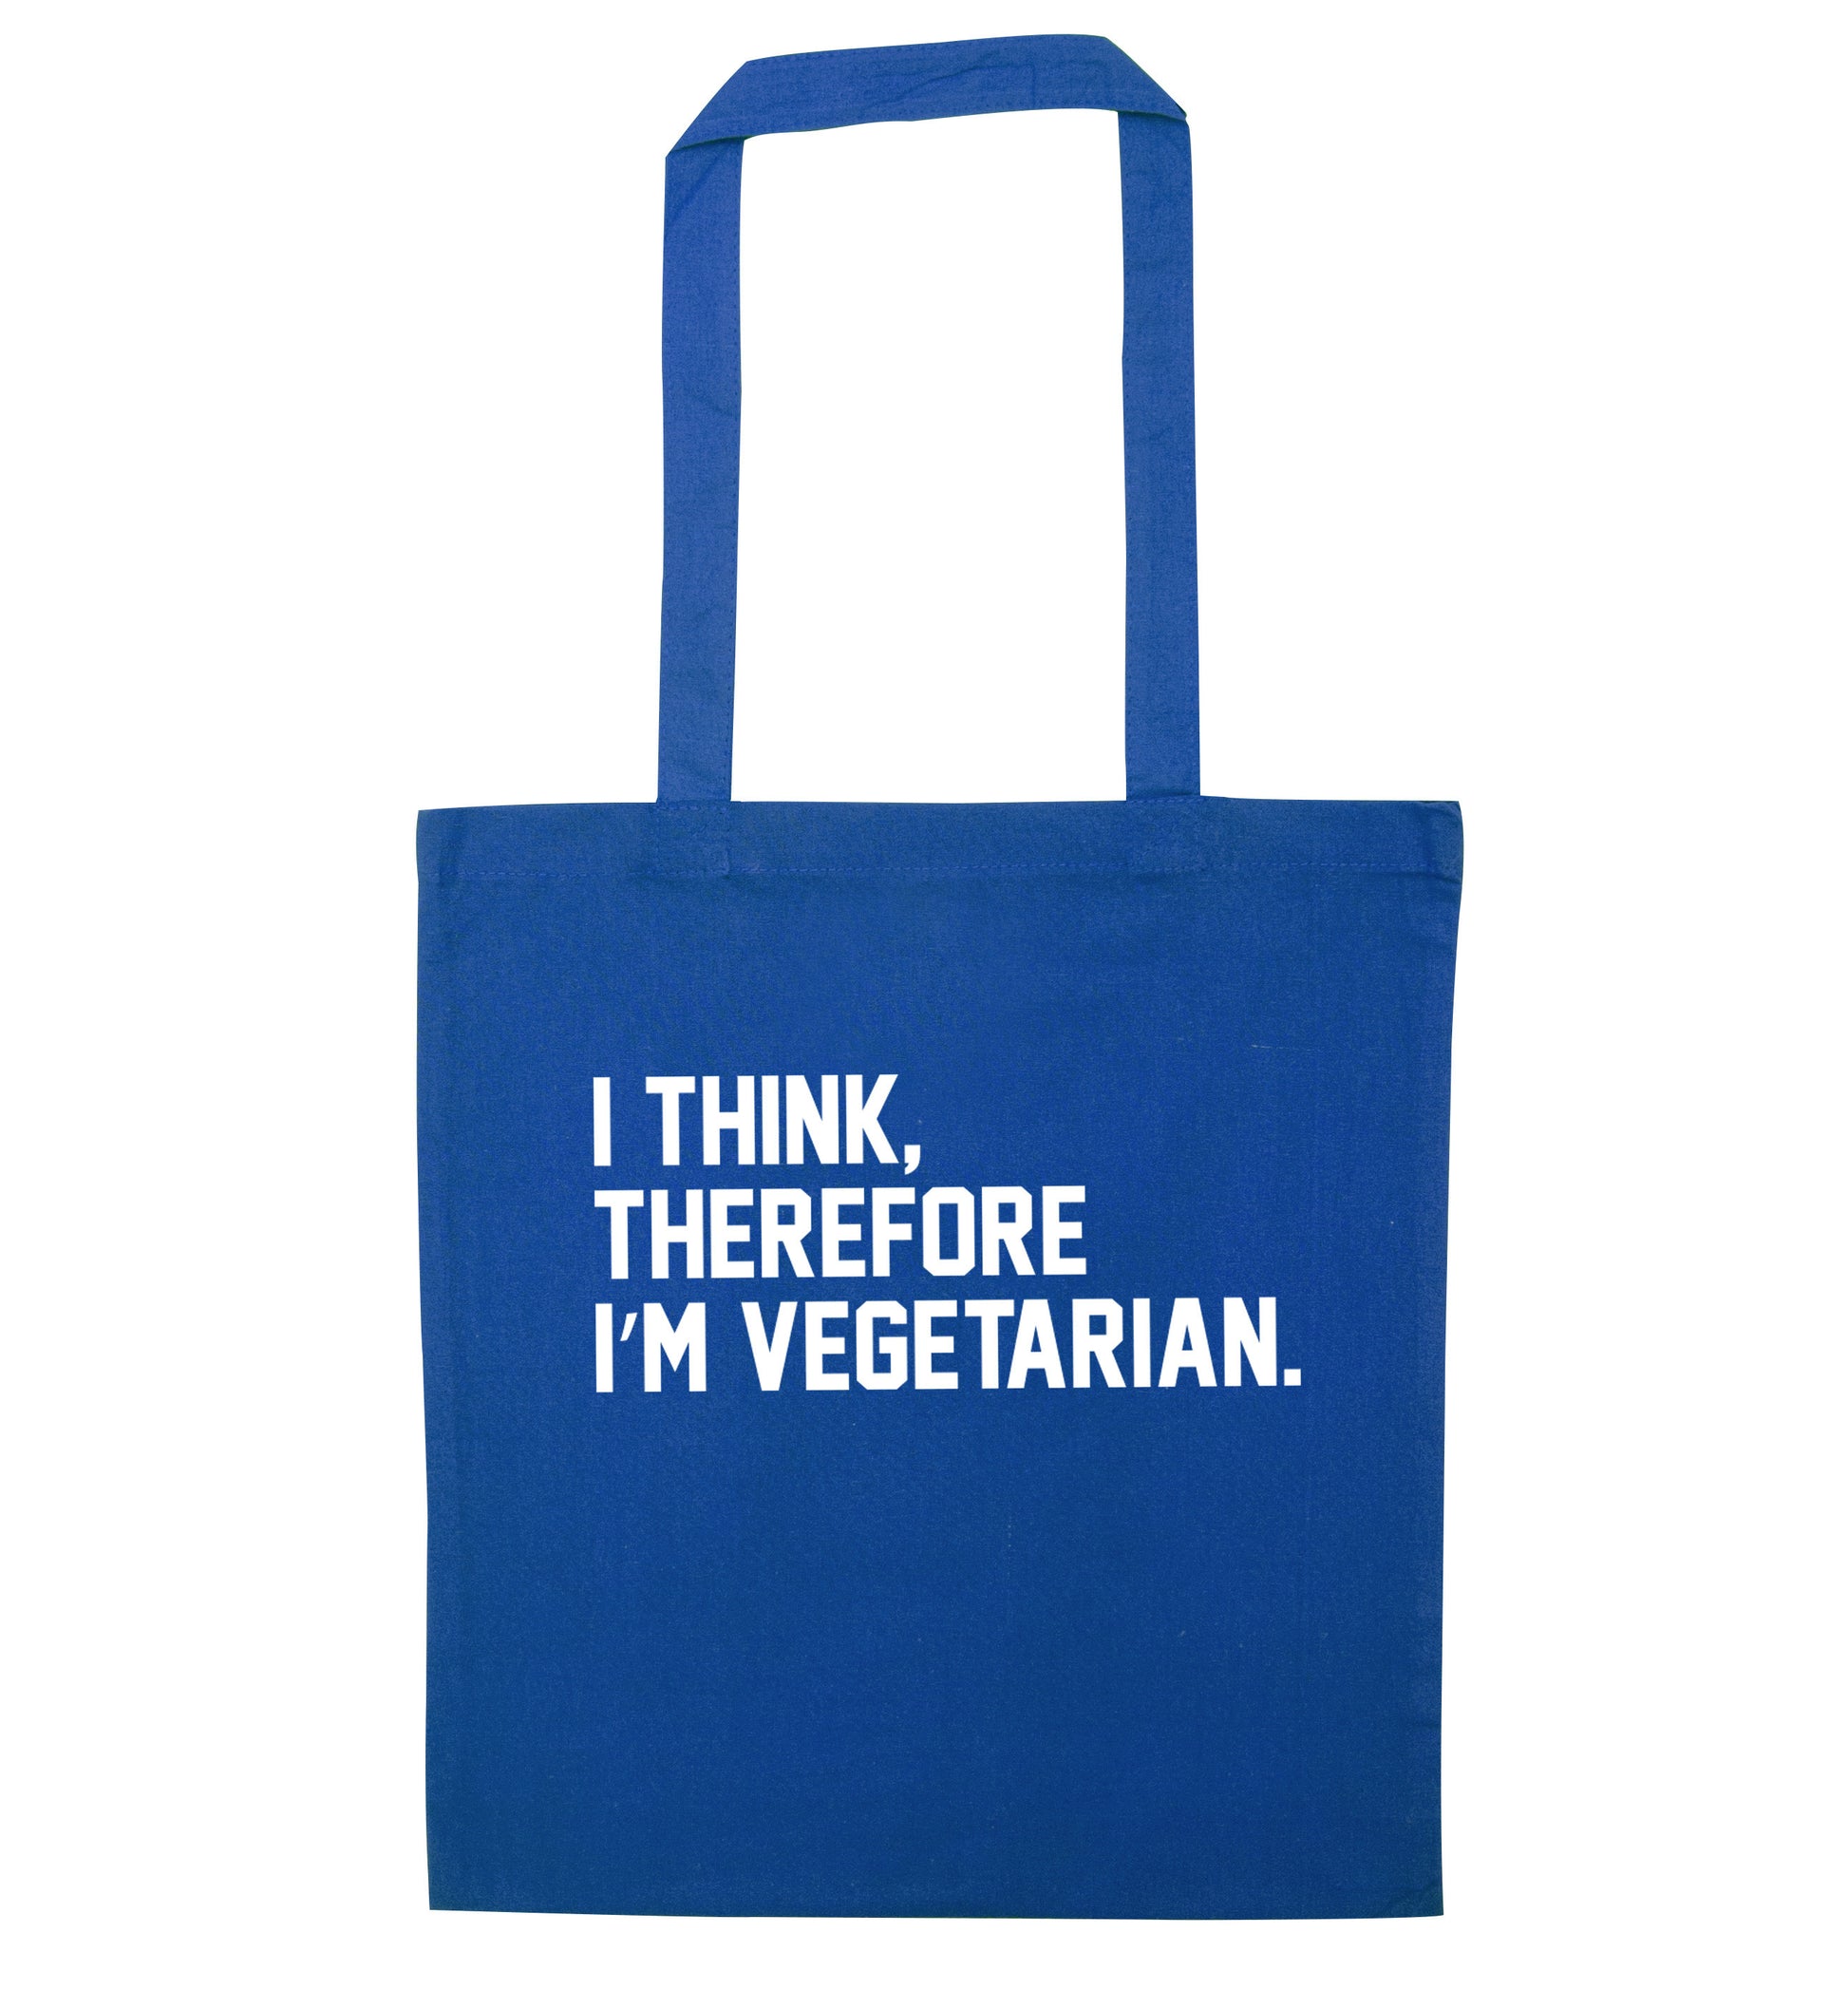 I think therefore I'm vegetarian blue tote bag